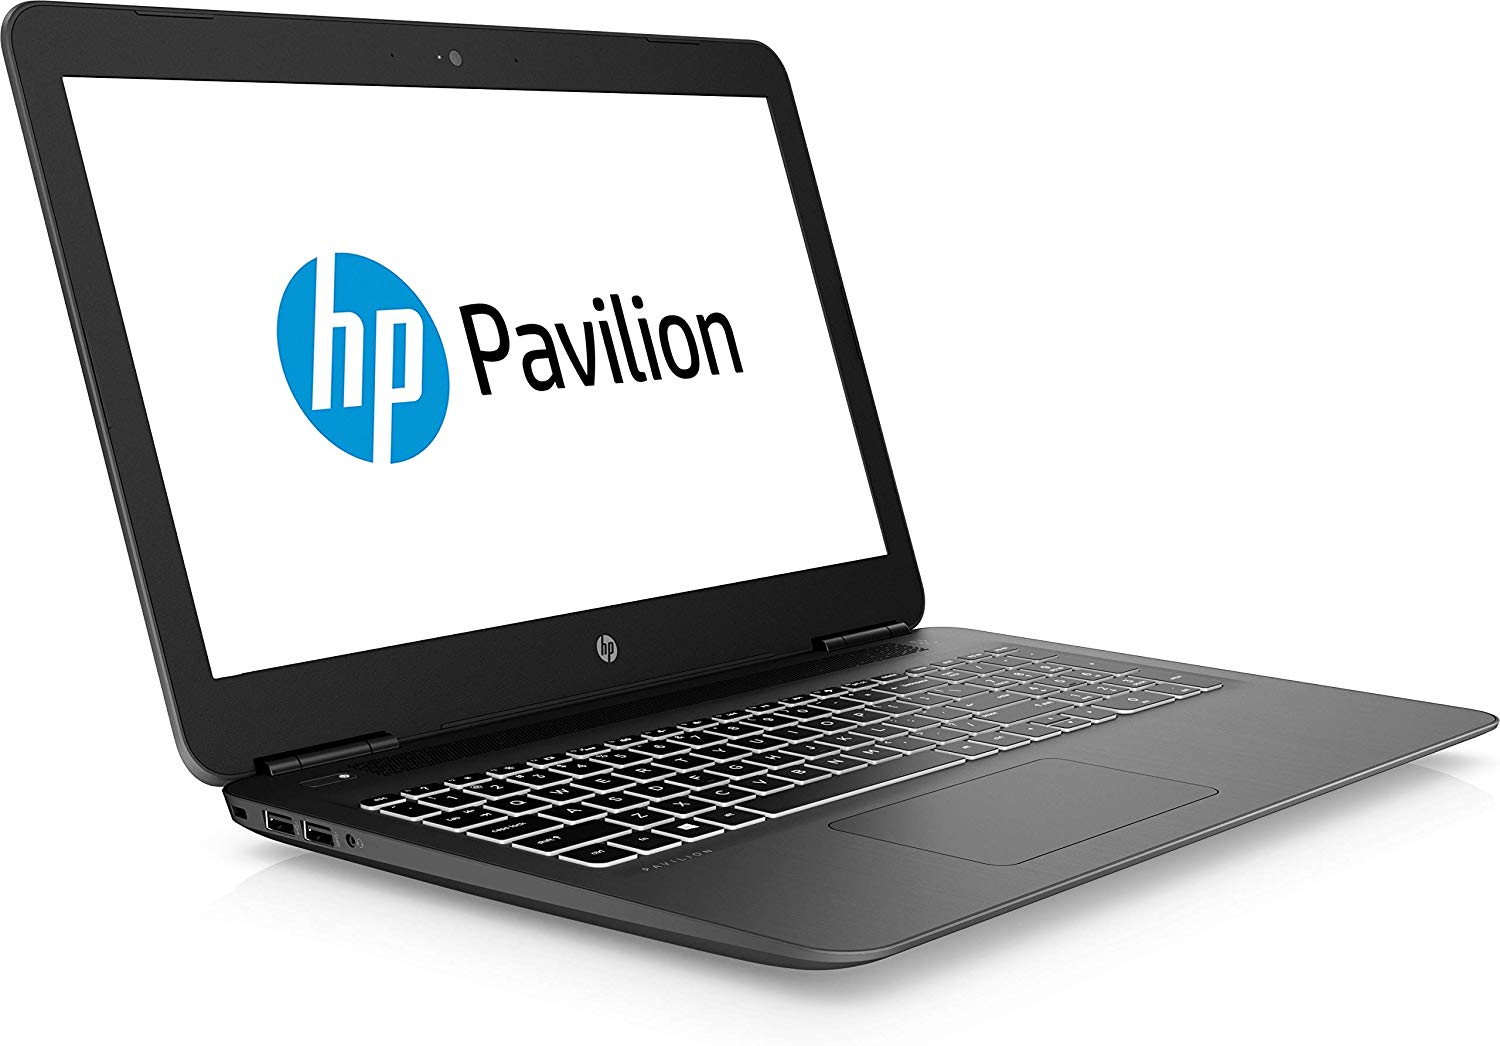 HP Pavilion 15-bc500ns - 15.6 "FullHD Laptop (Intel Core i5-9300H, 8GB RAM, 1TB HDD + 128GB SSD ...